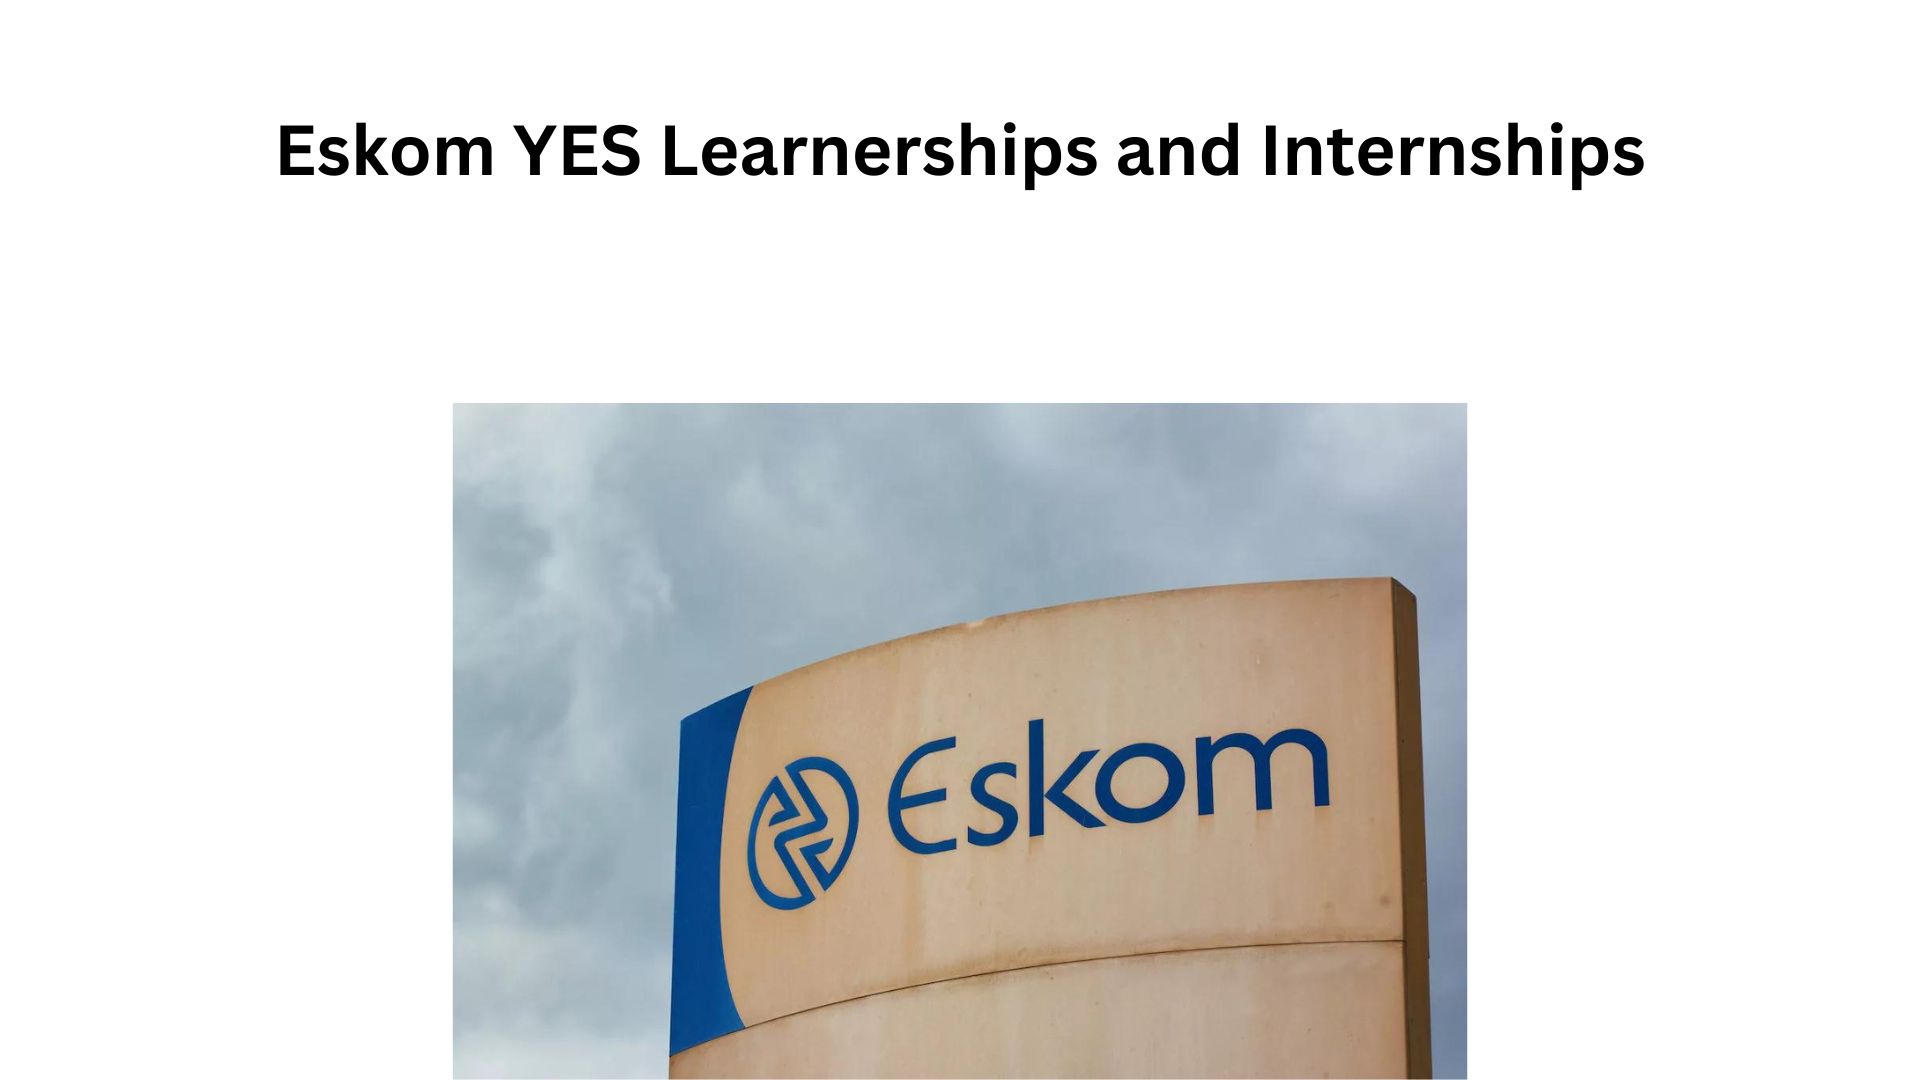 Eskom YES Learnerships and Internships